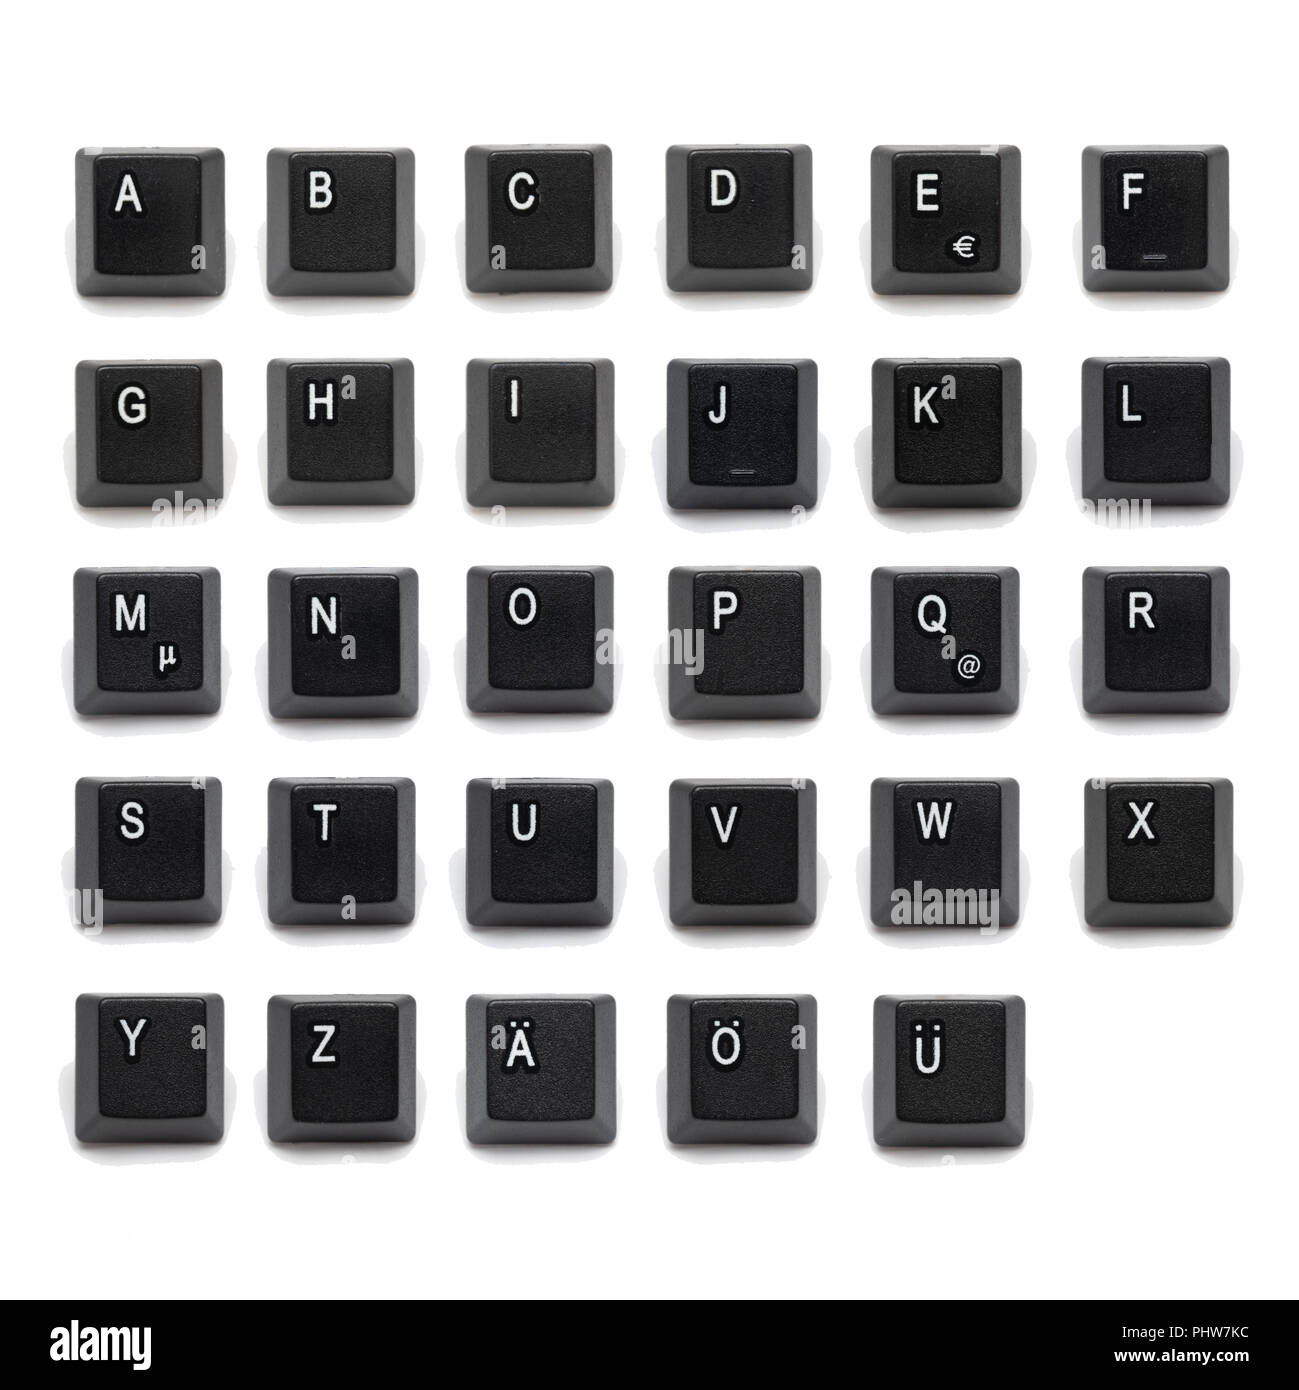 Alphabet keys Cut Out Stock Images & Pictures - Alamy